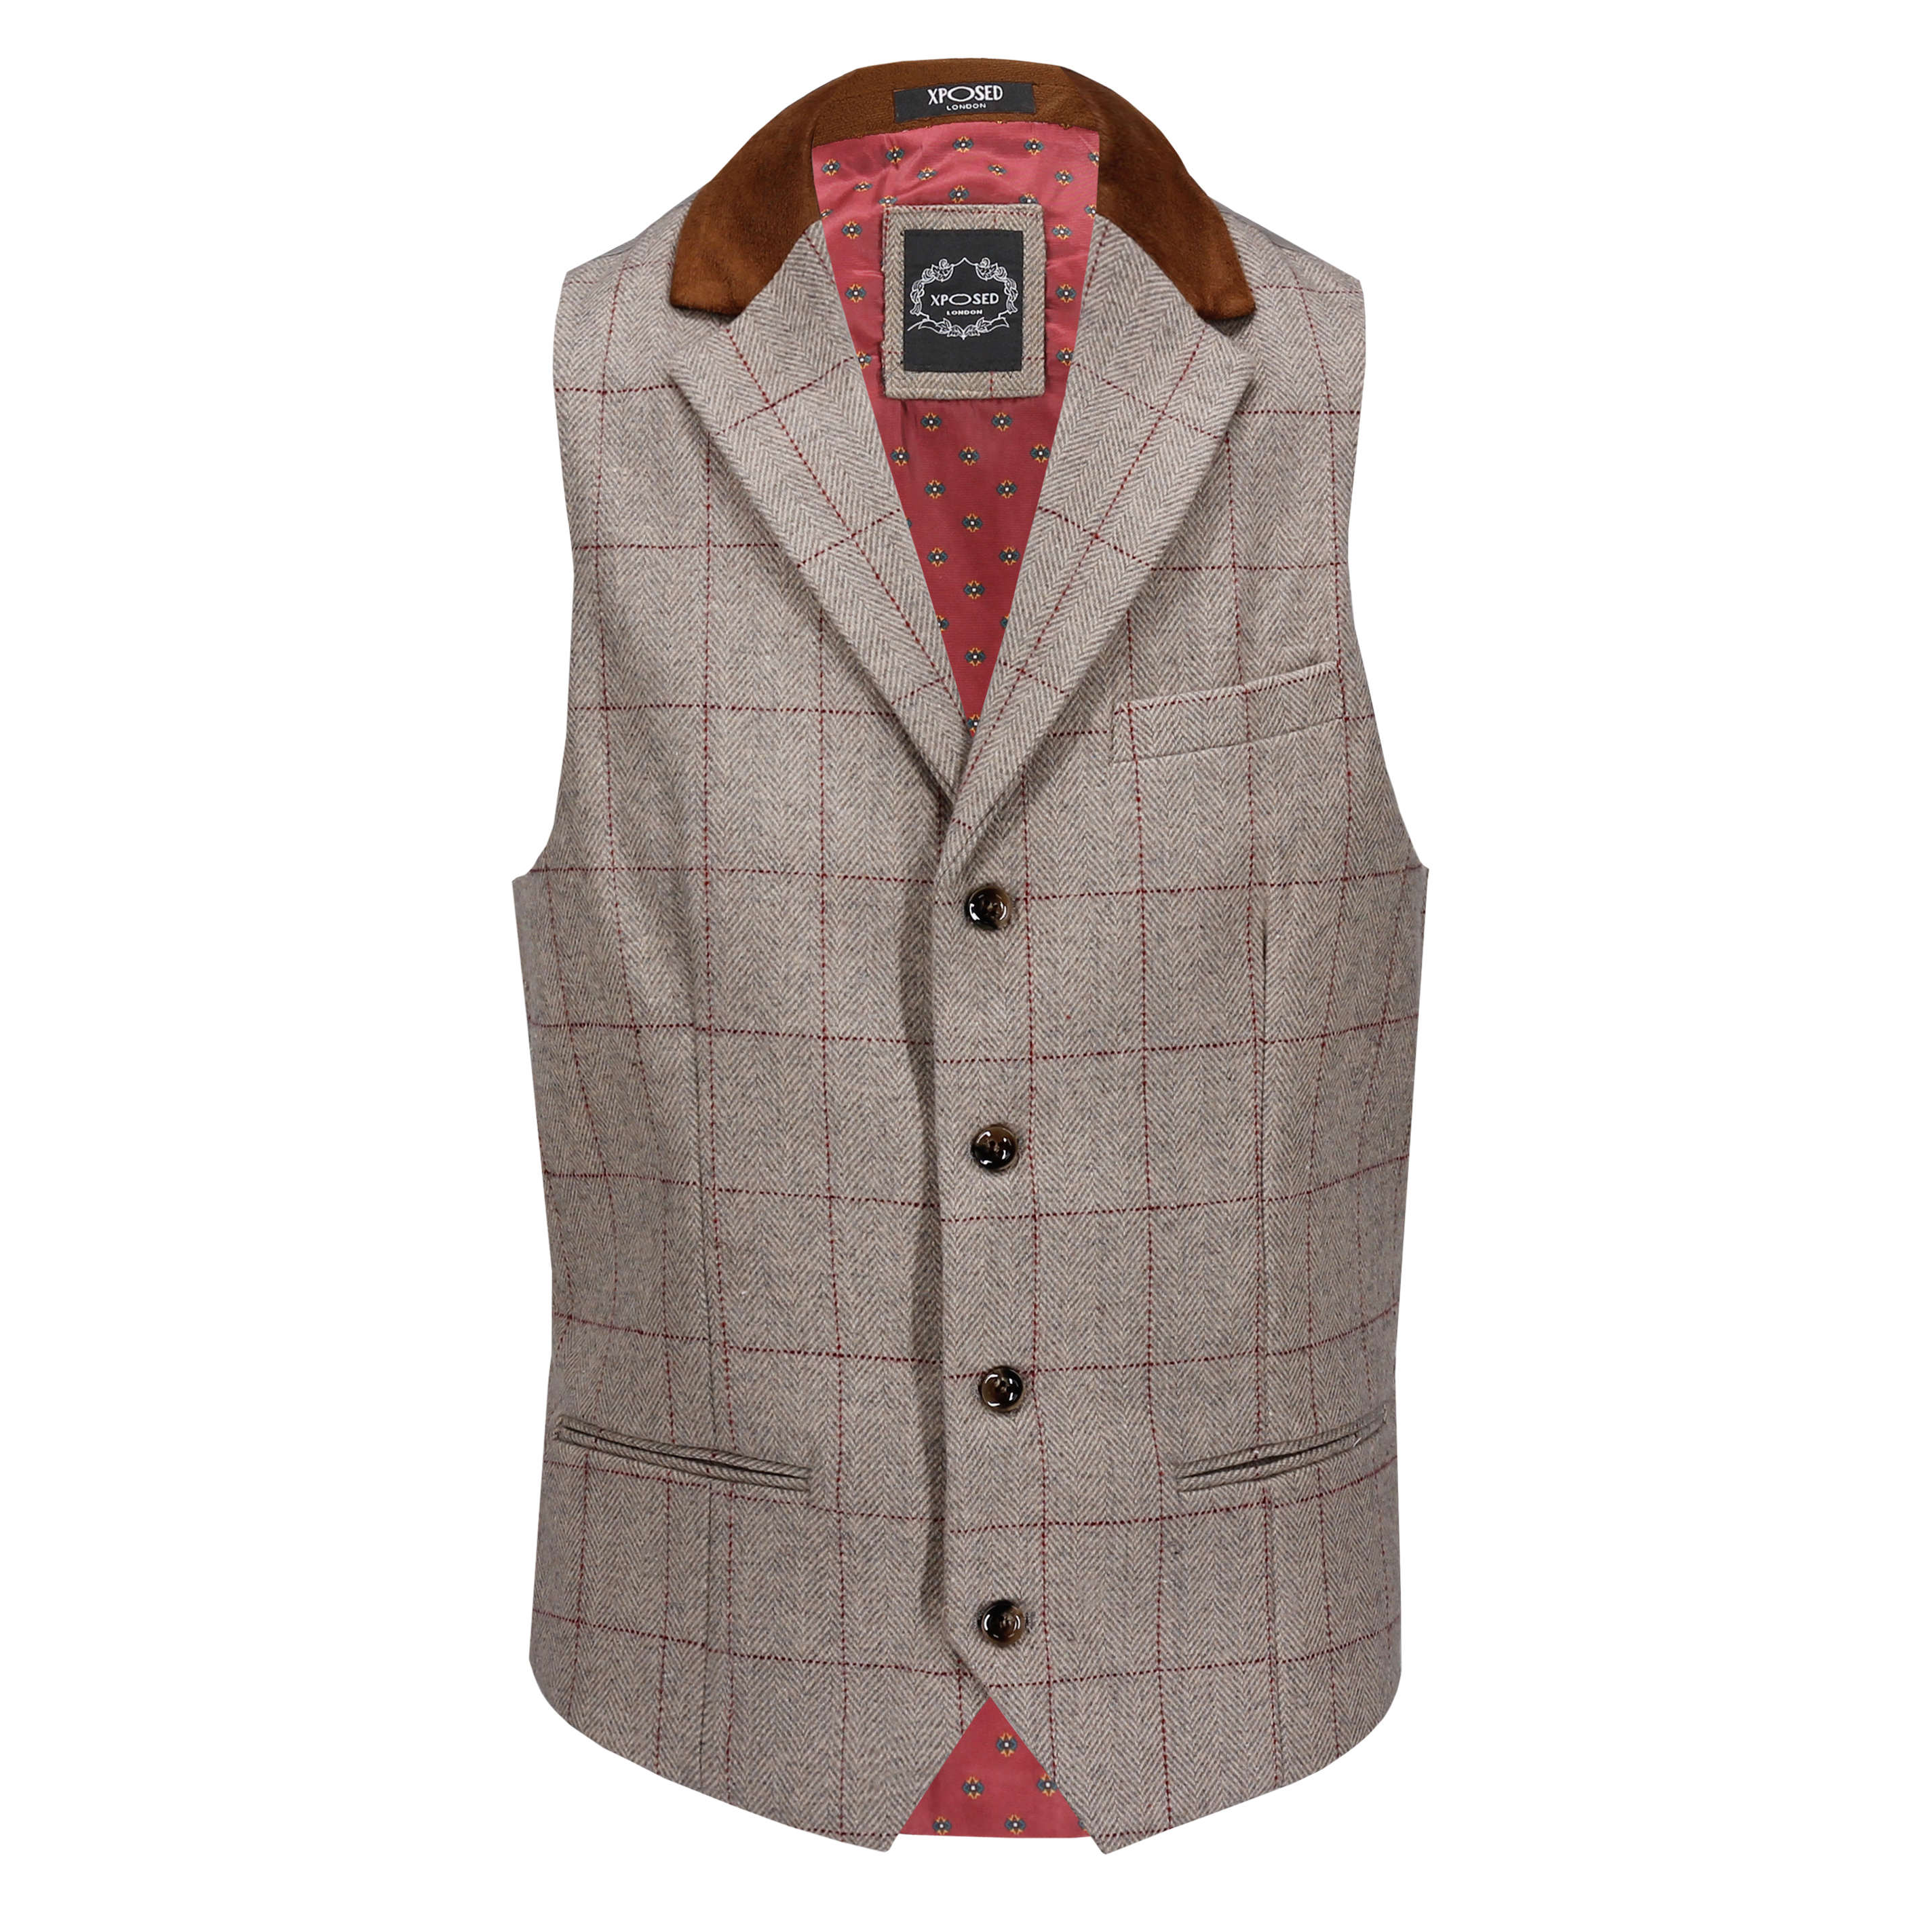 Herringbone Tweed Check Tan Collared Waistcoat